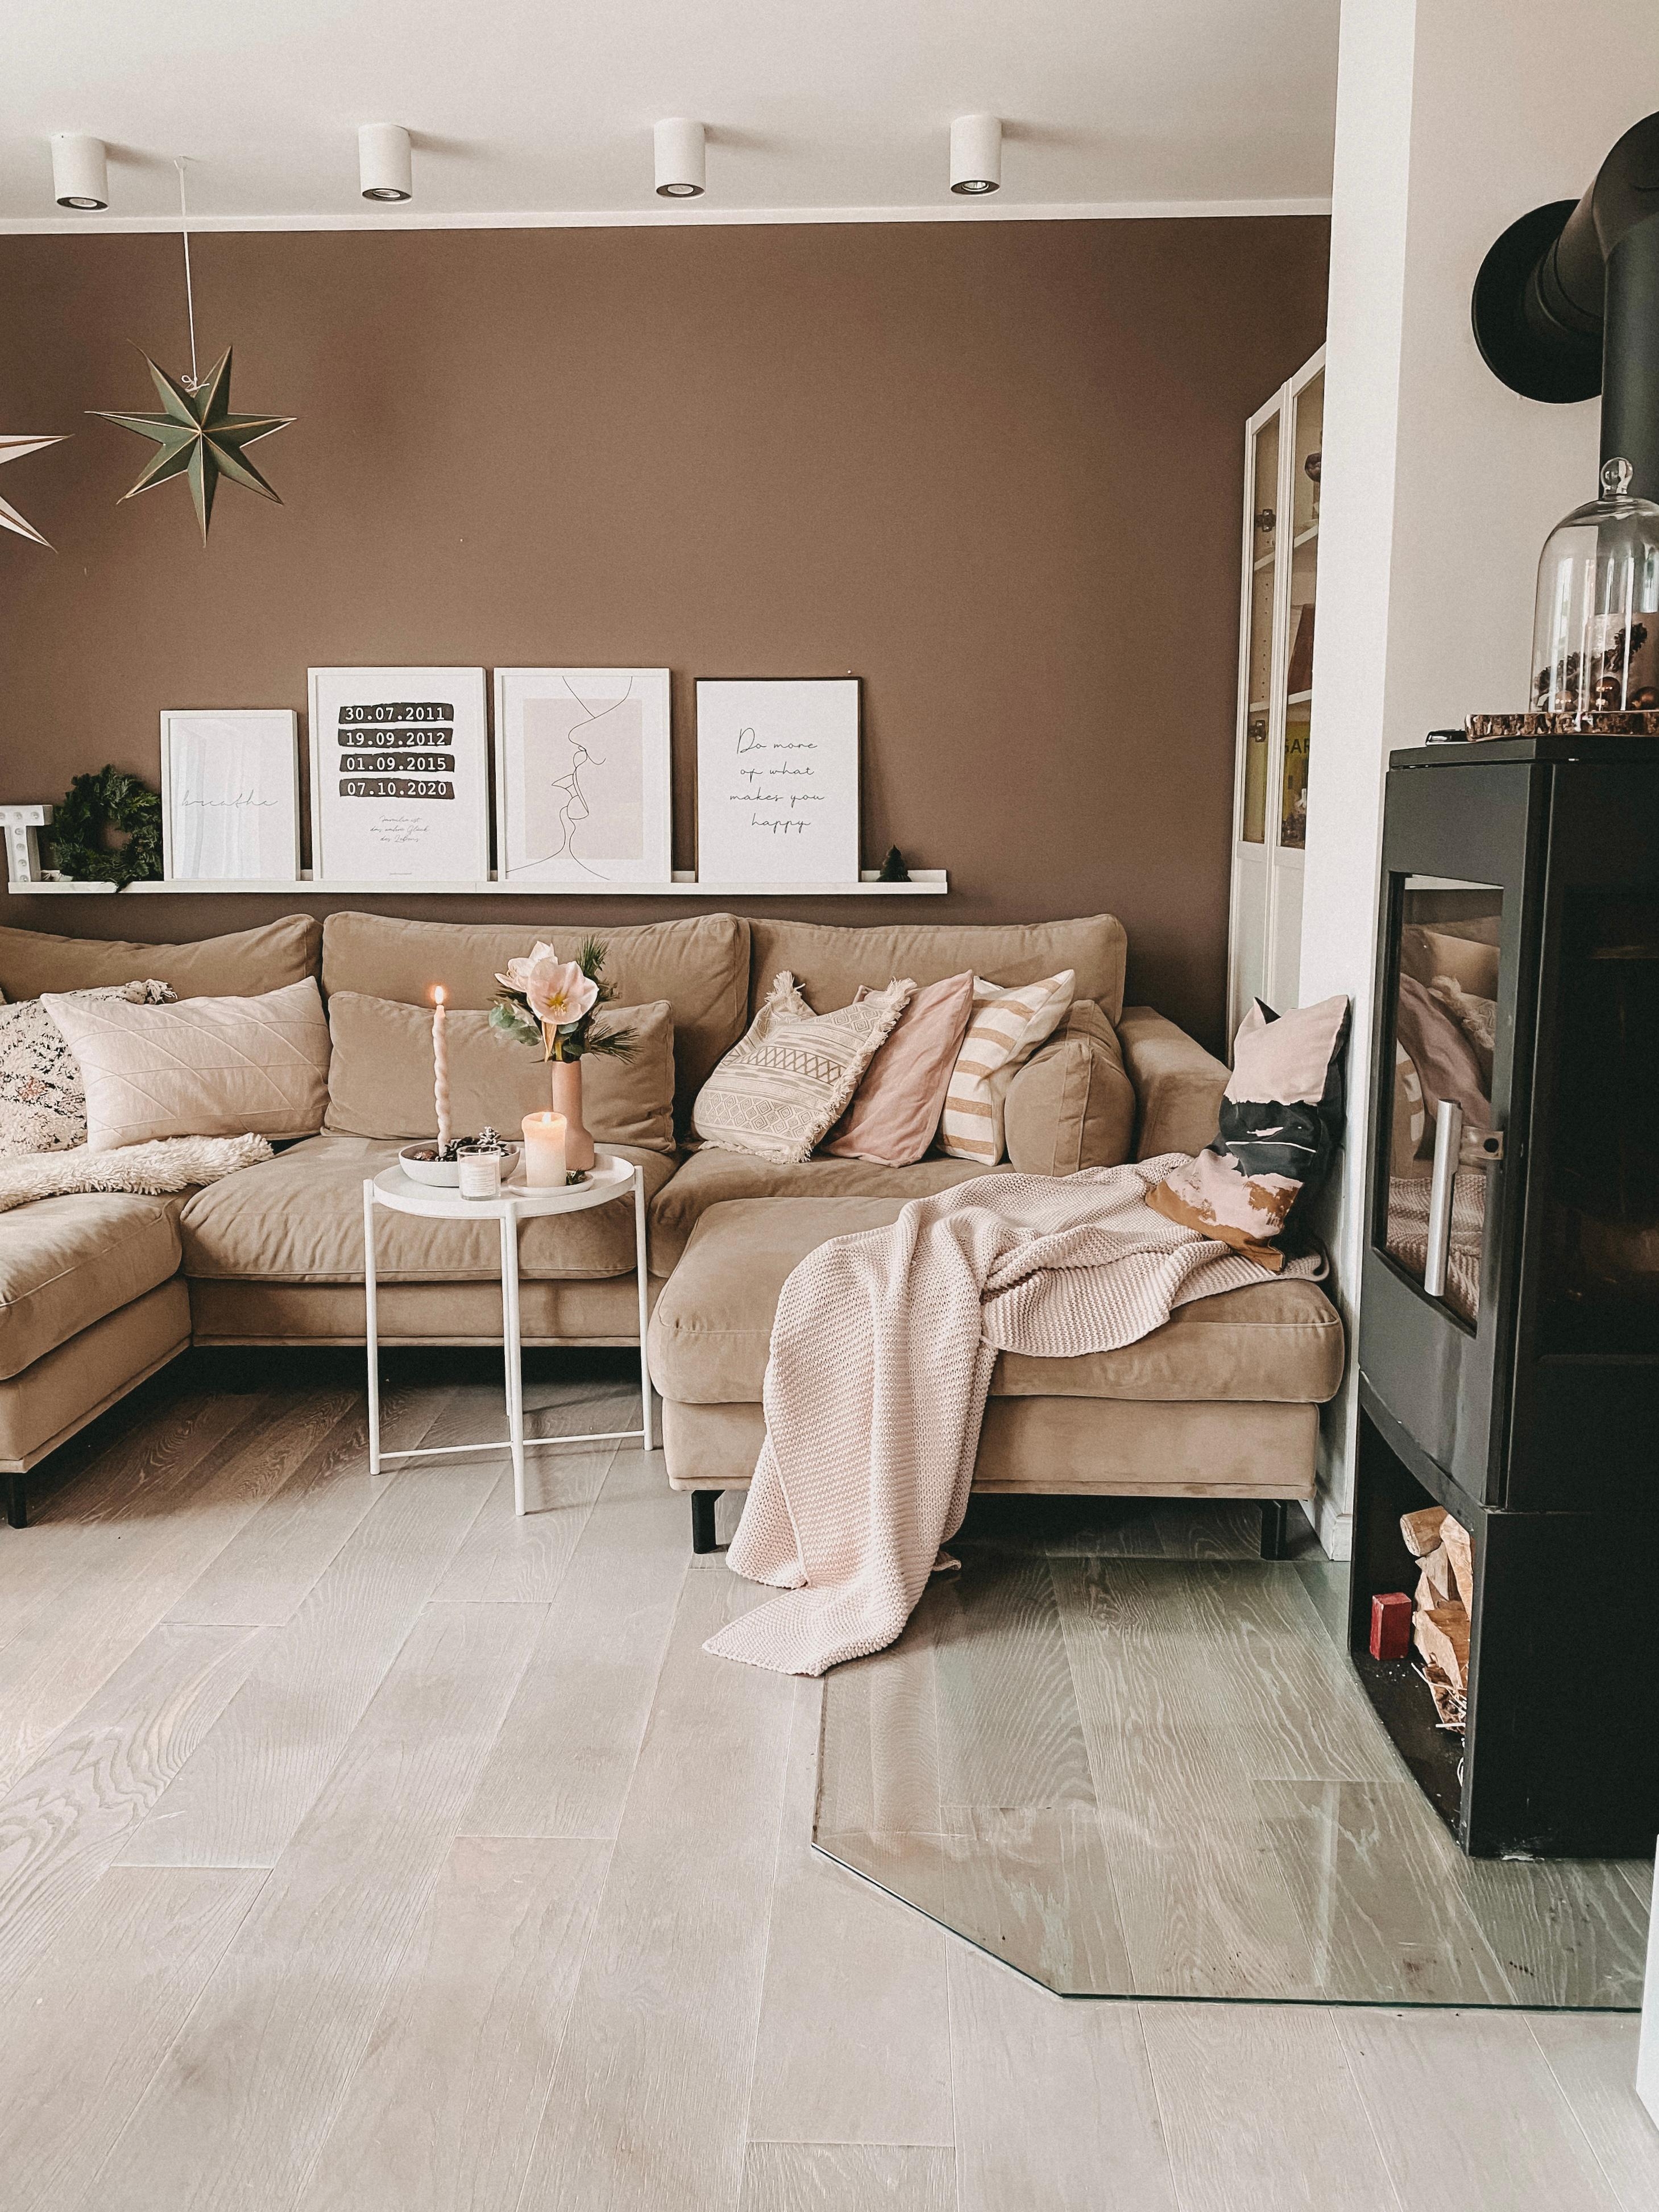 Cozy Couch ⭐️
#livingroom
#couch
#kamin
#ksminofen
